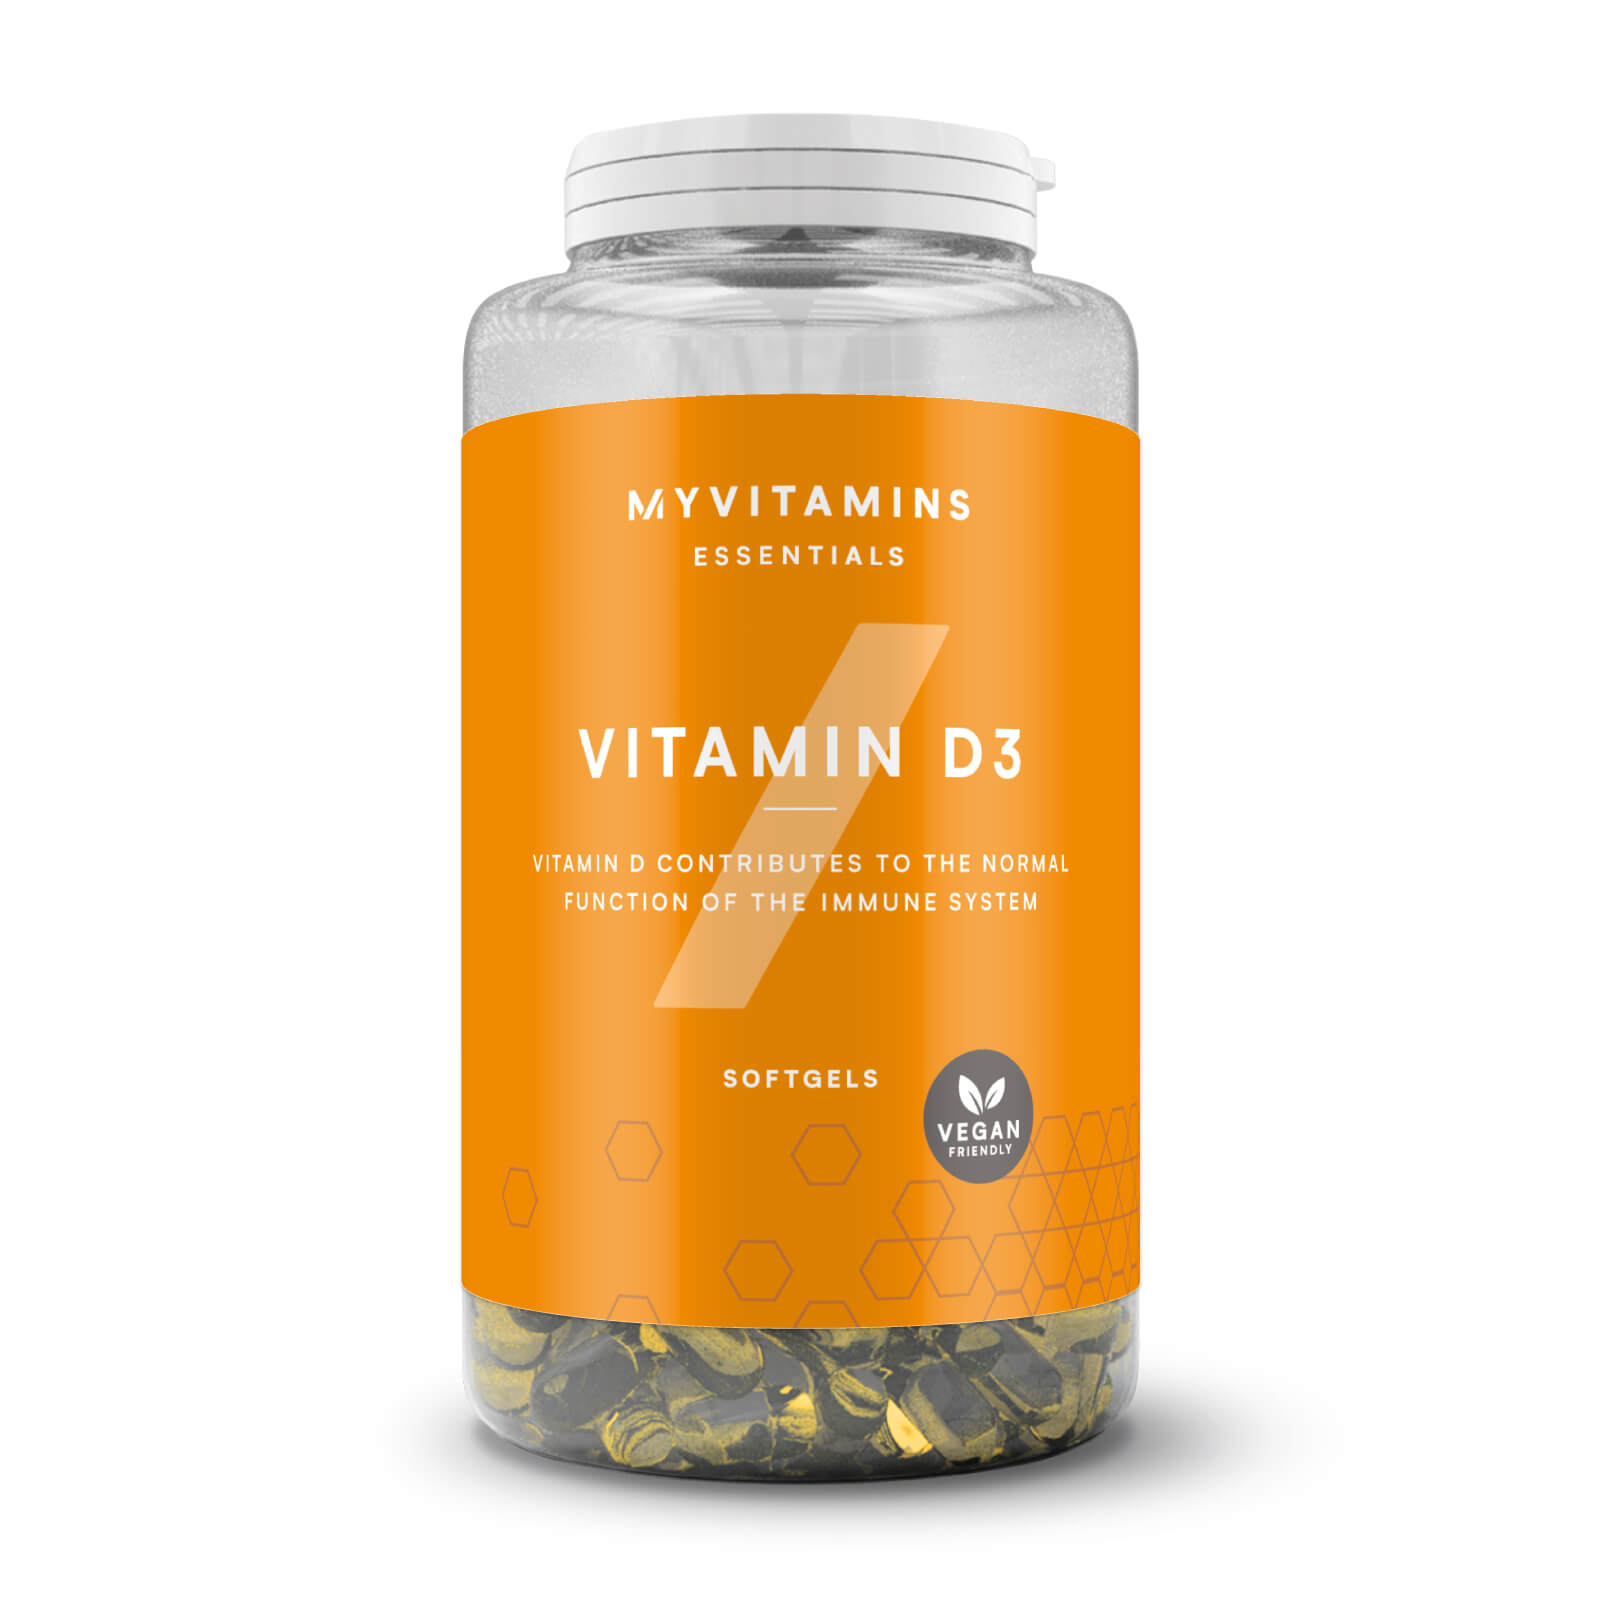 Myvitamins Vegan Vitamin D Softgels - 60Softgels - Unflavoured